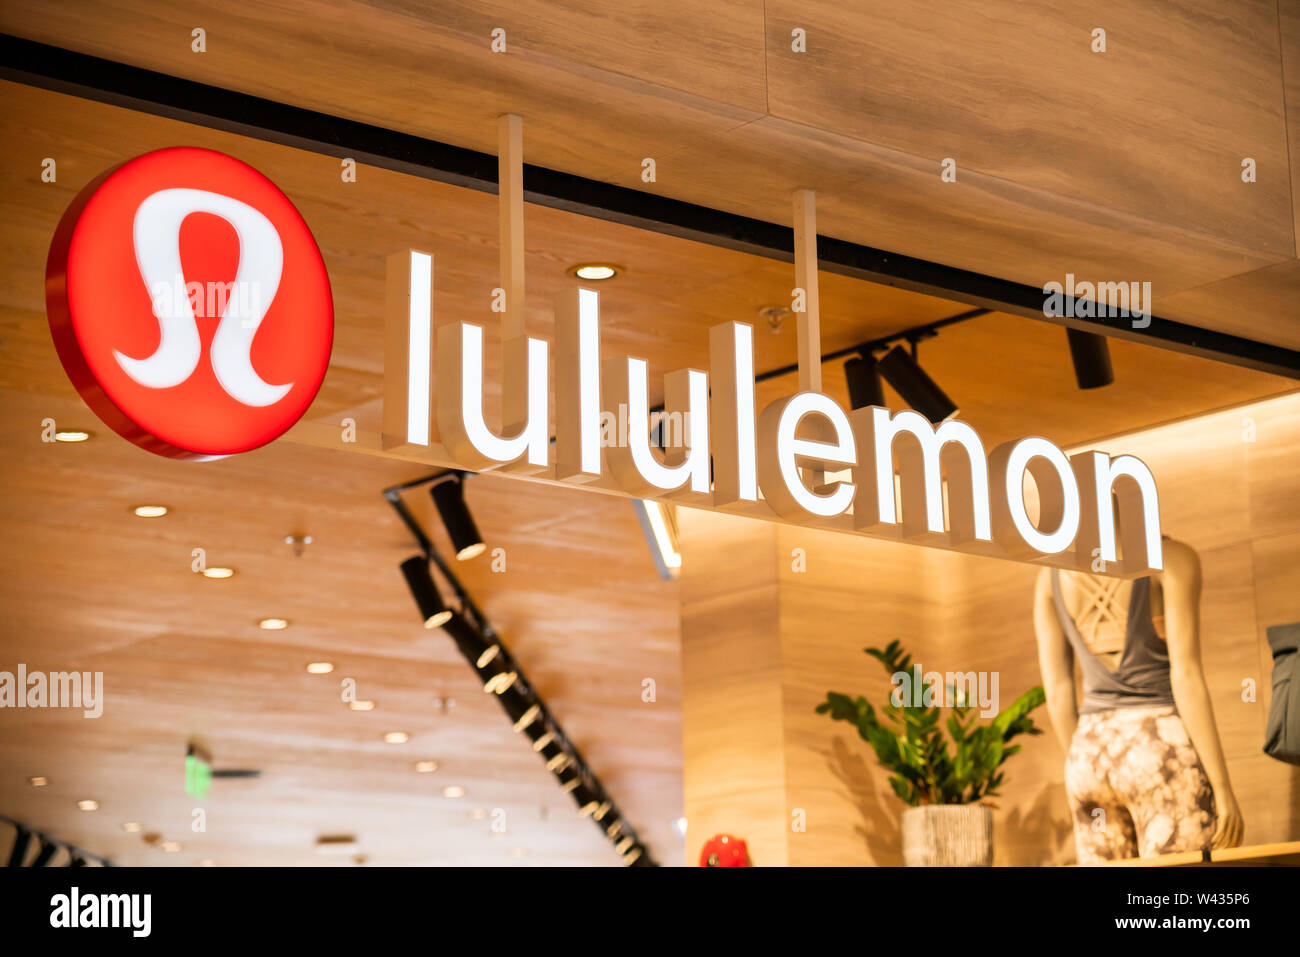 Canadian athletic apparel retailer, Lululemon logo seen in